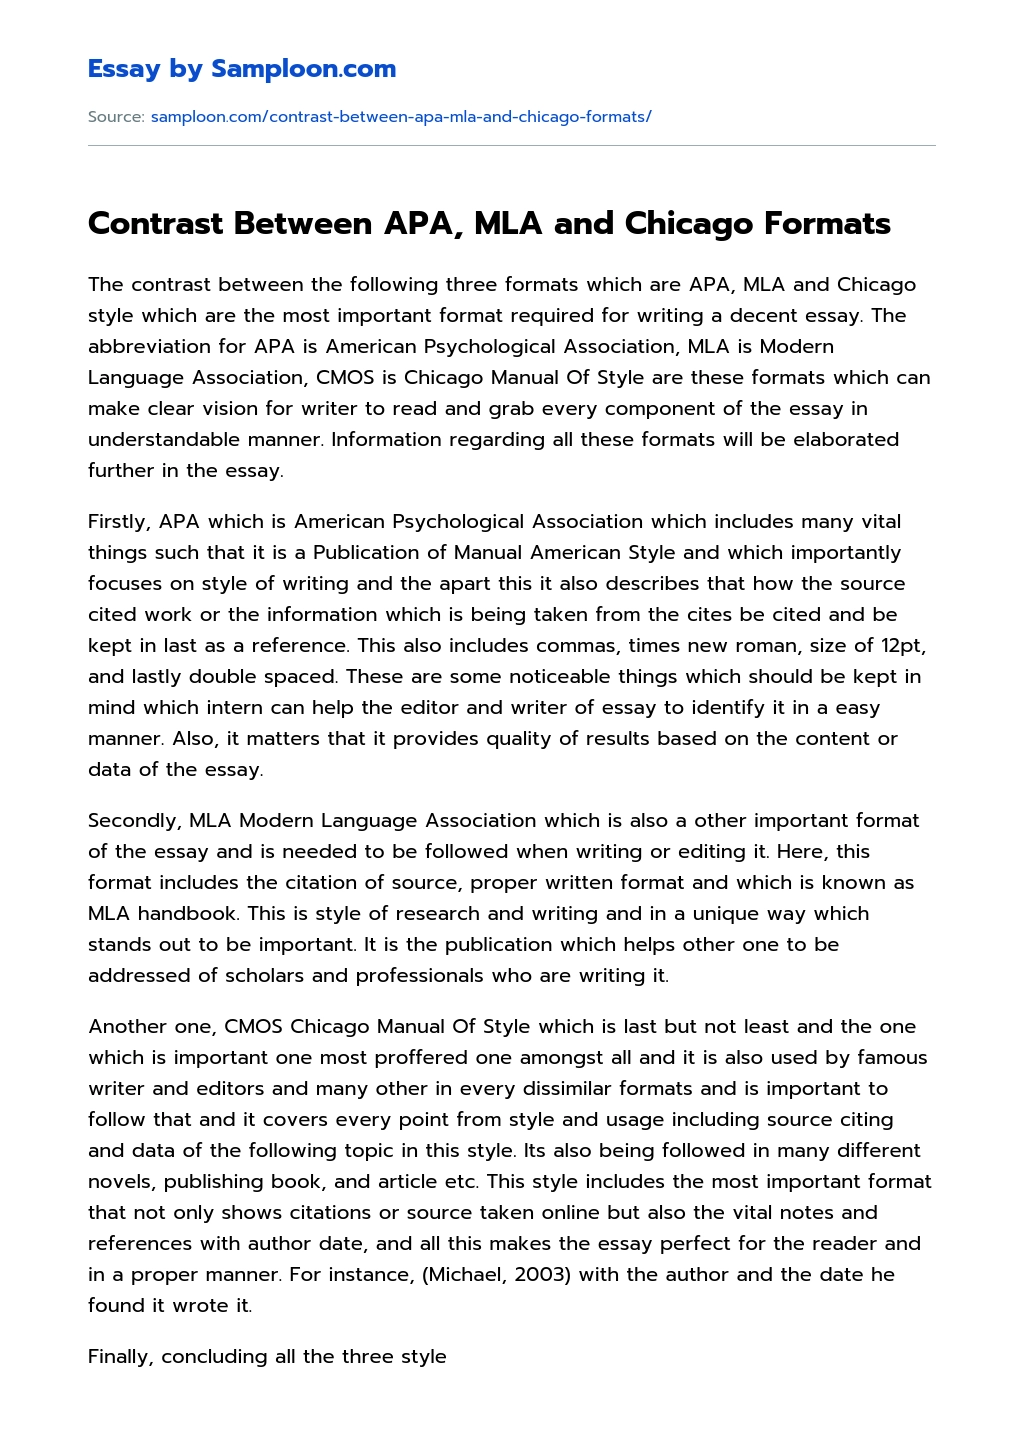 Contrast Between APA, MLA and Chicago Formats essay